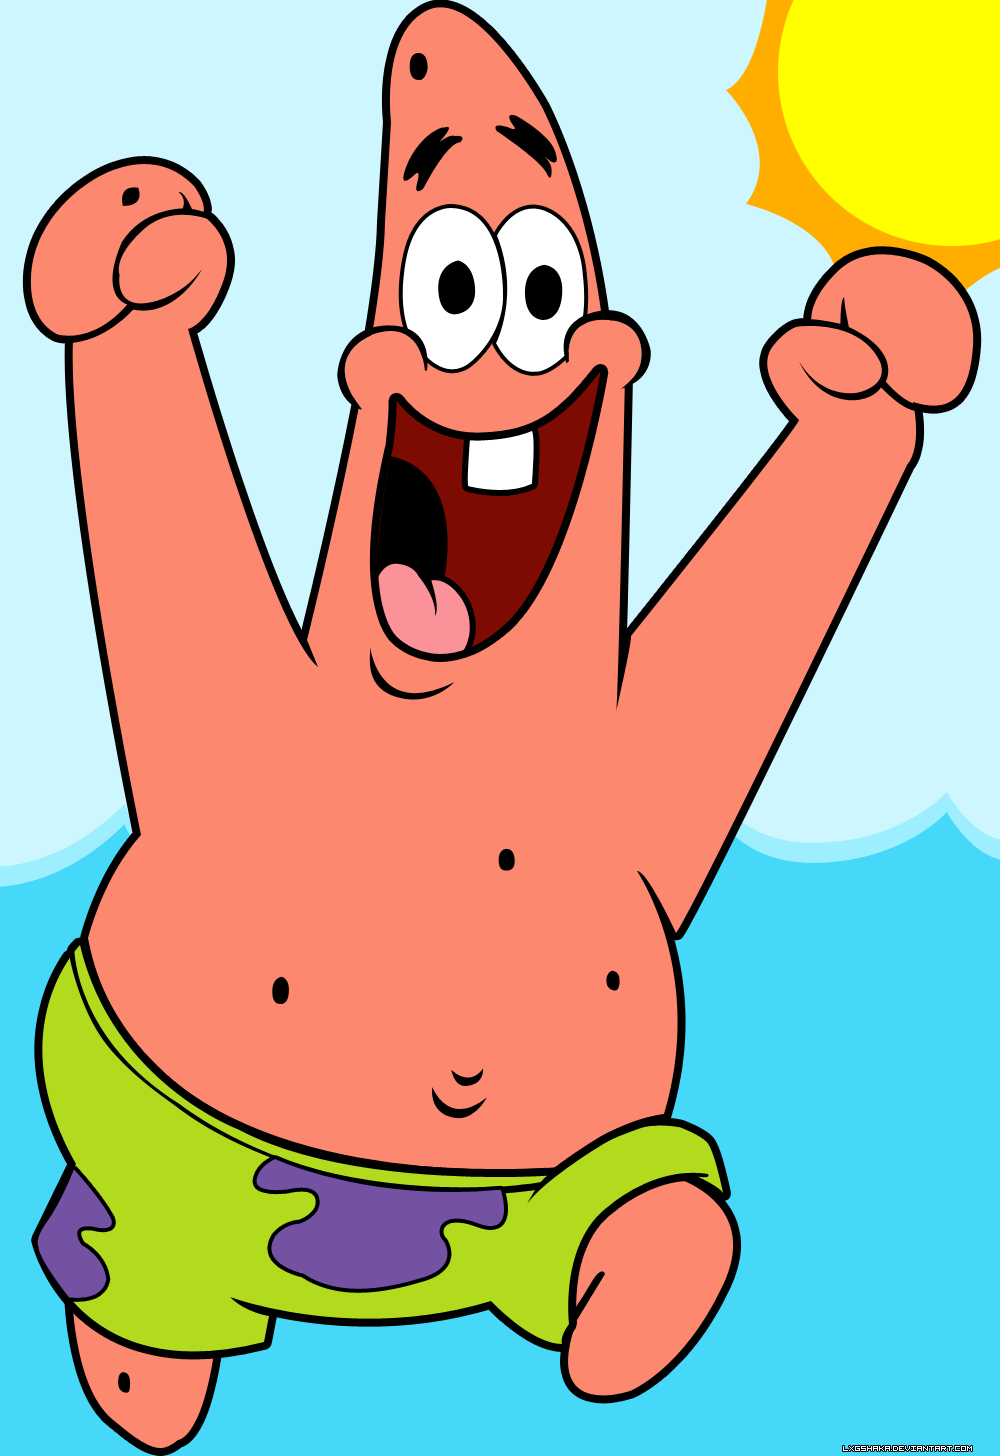 Patrick+spongebob+squarepants+pictures+3.png